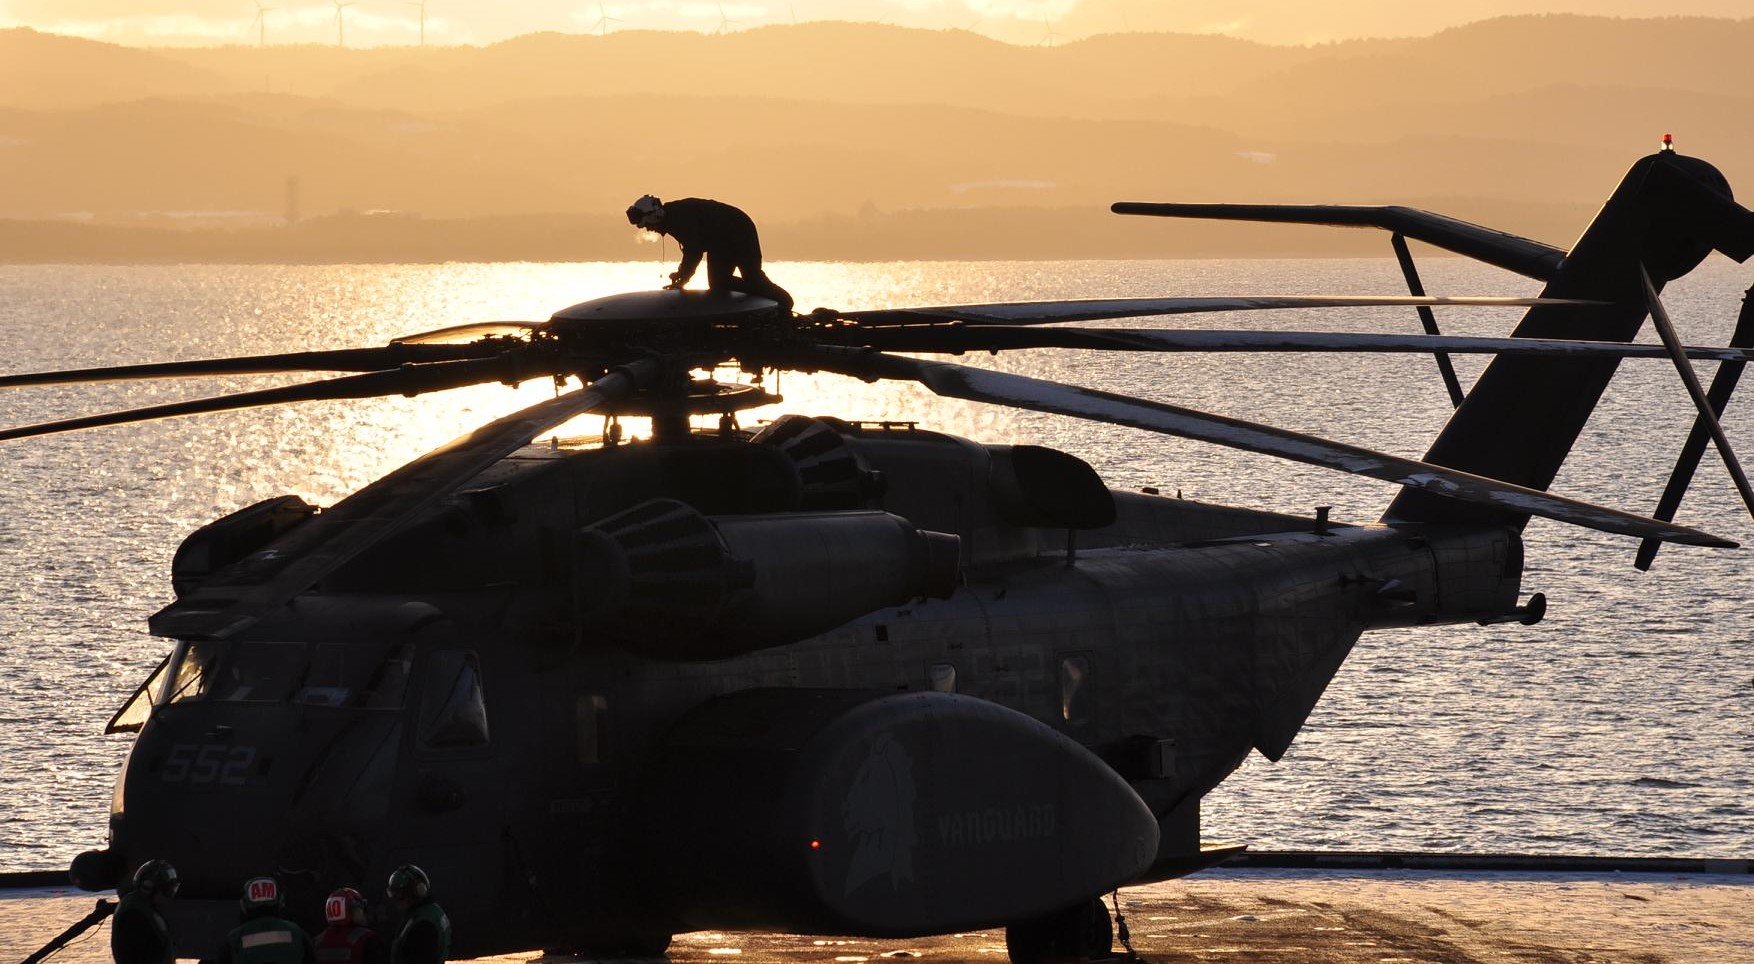 hm-14 vanguard helicopter mine countermeasures squadron navy mh-53e sea dragon 150 uss ronald reagan cvn-76